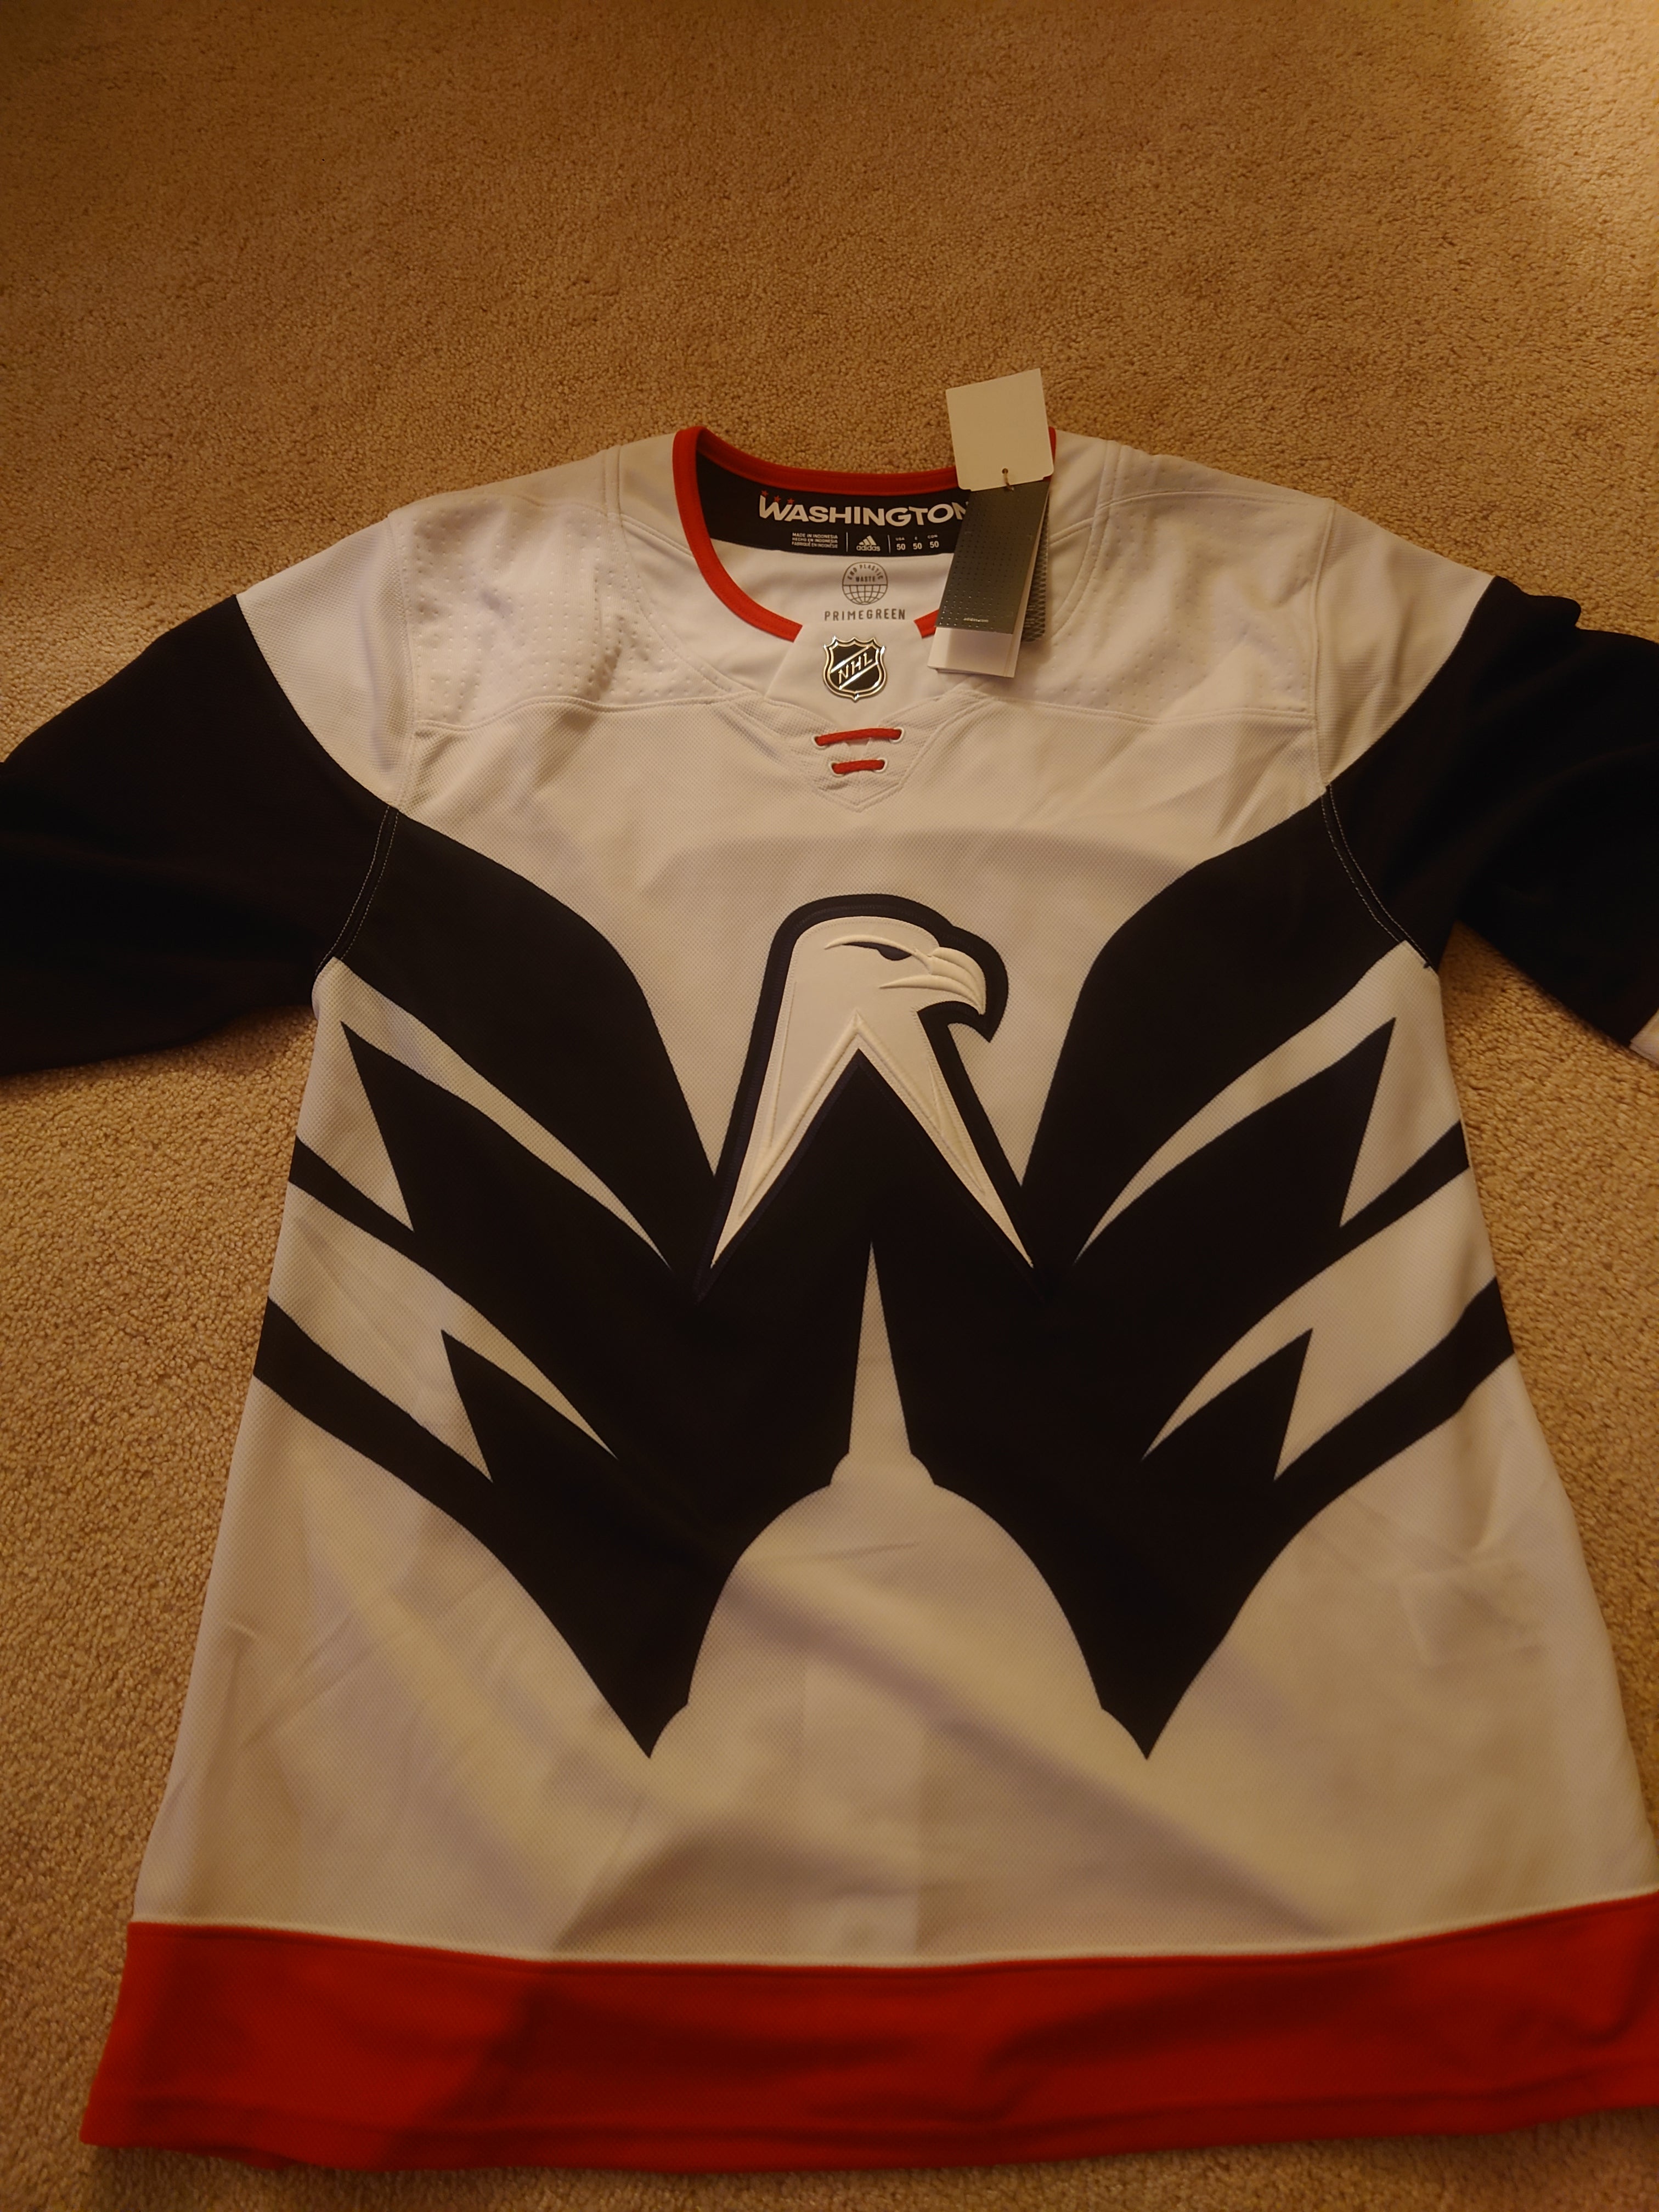 Washington Capitals Adidas AdiZero Authentic NHL Hockey Jersey